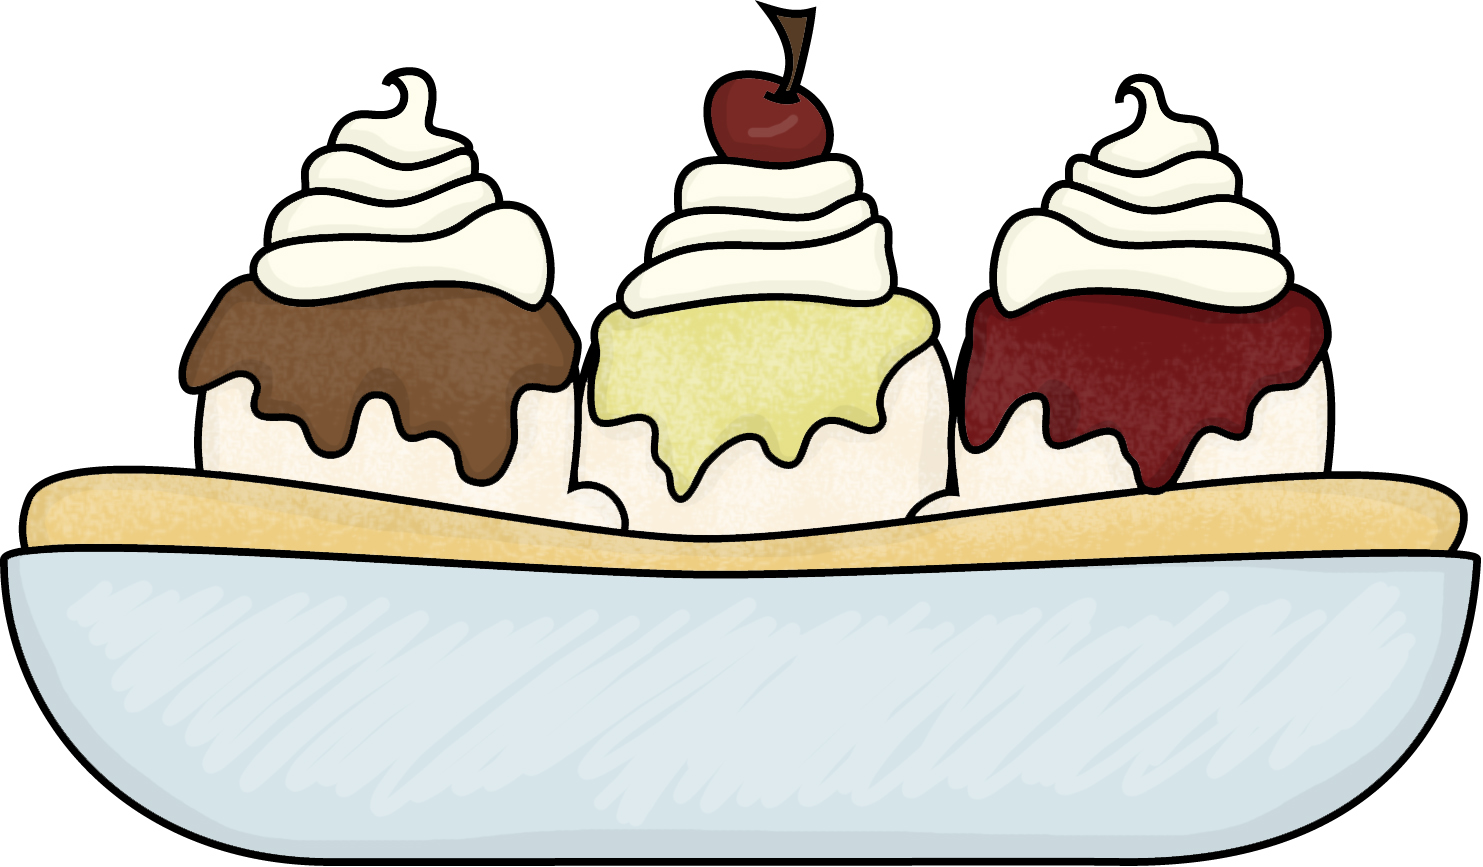 ice cream sundae clipart border - photo #25